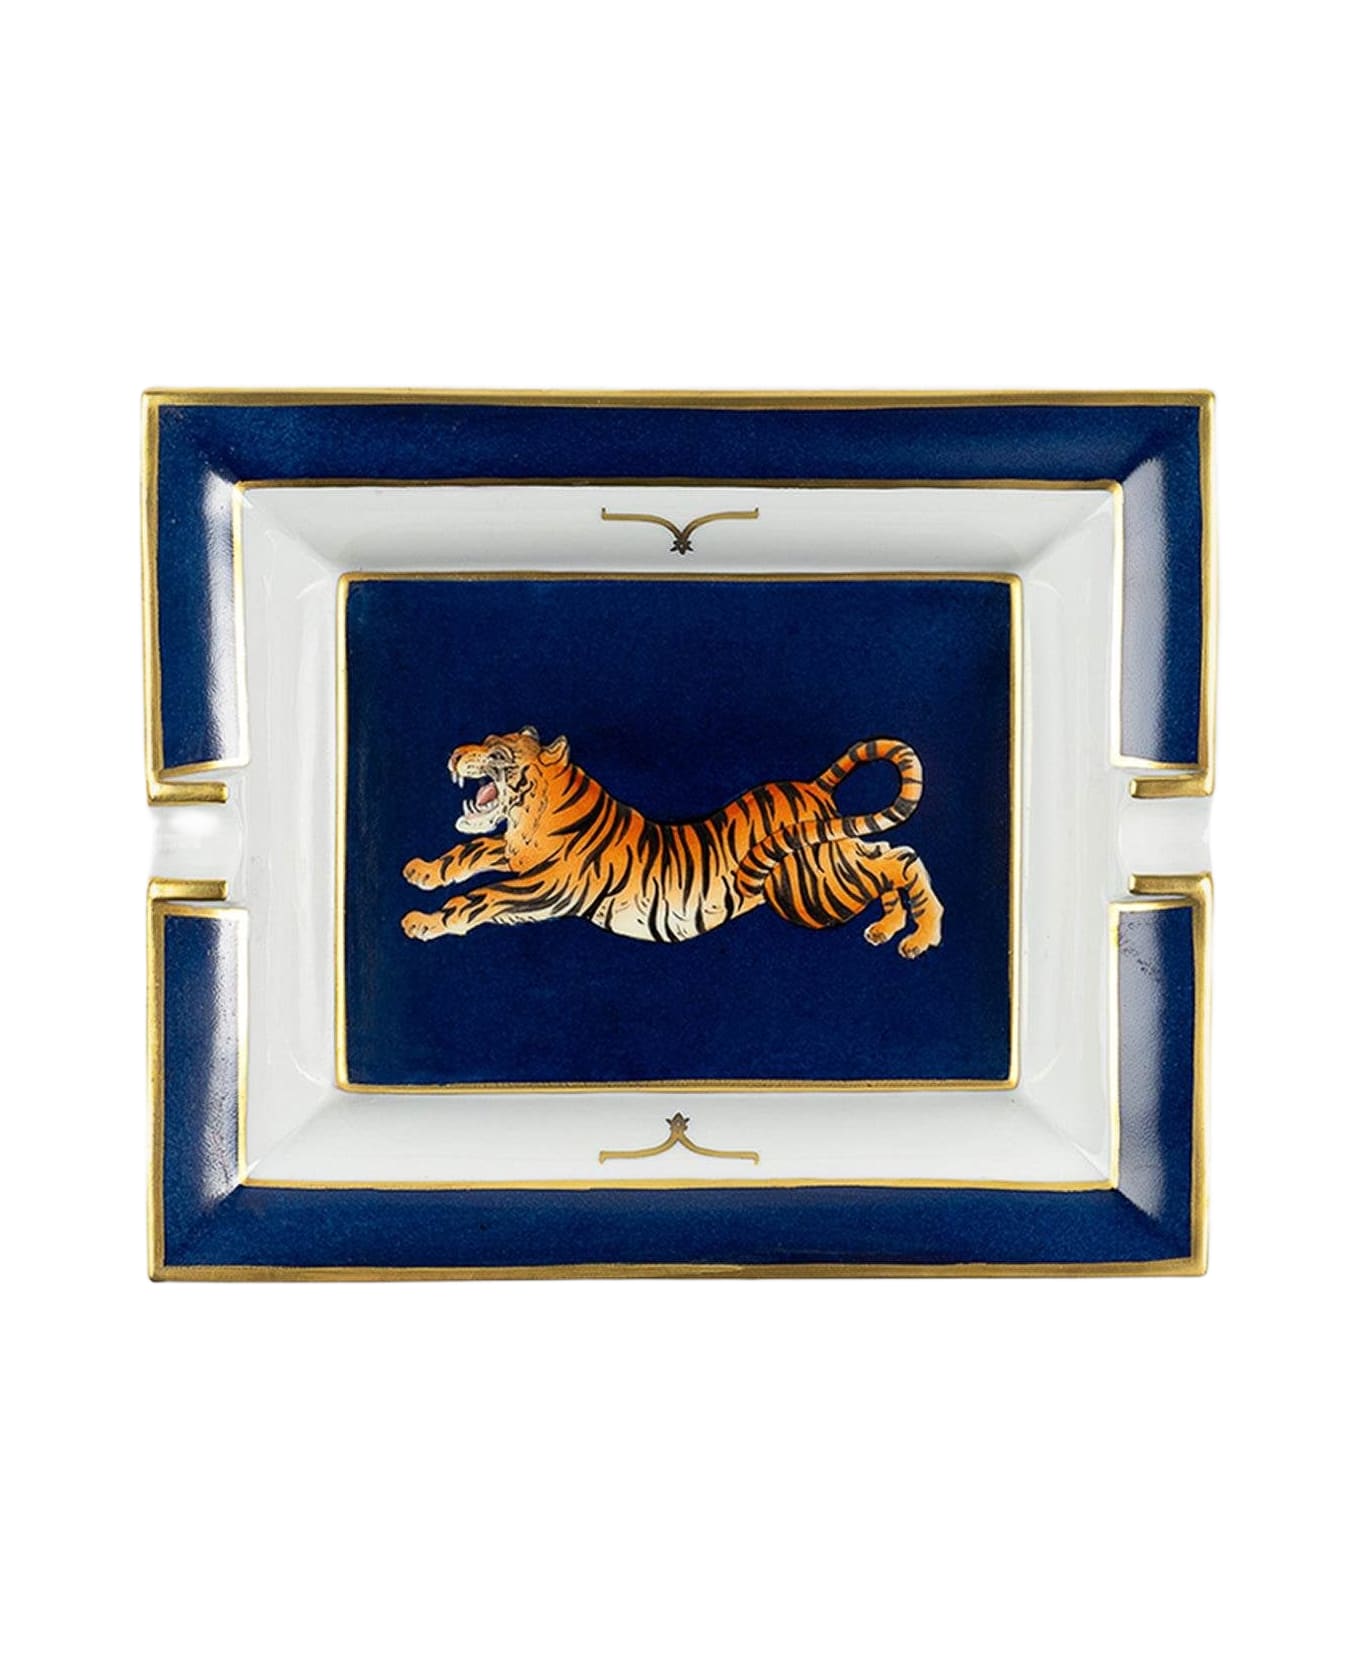 Larusmiani Ashtray 'tigre' Tray - Blue